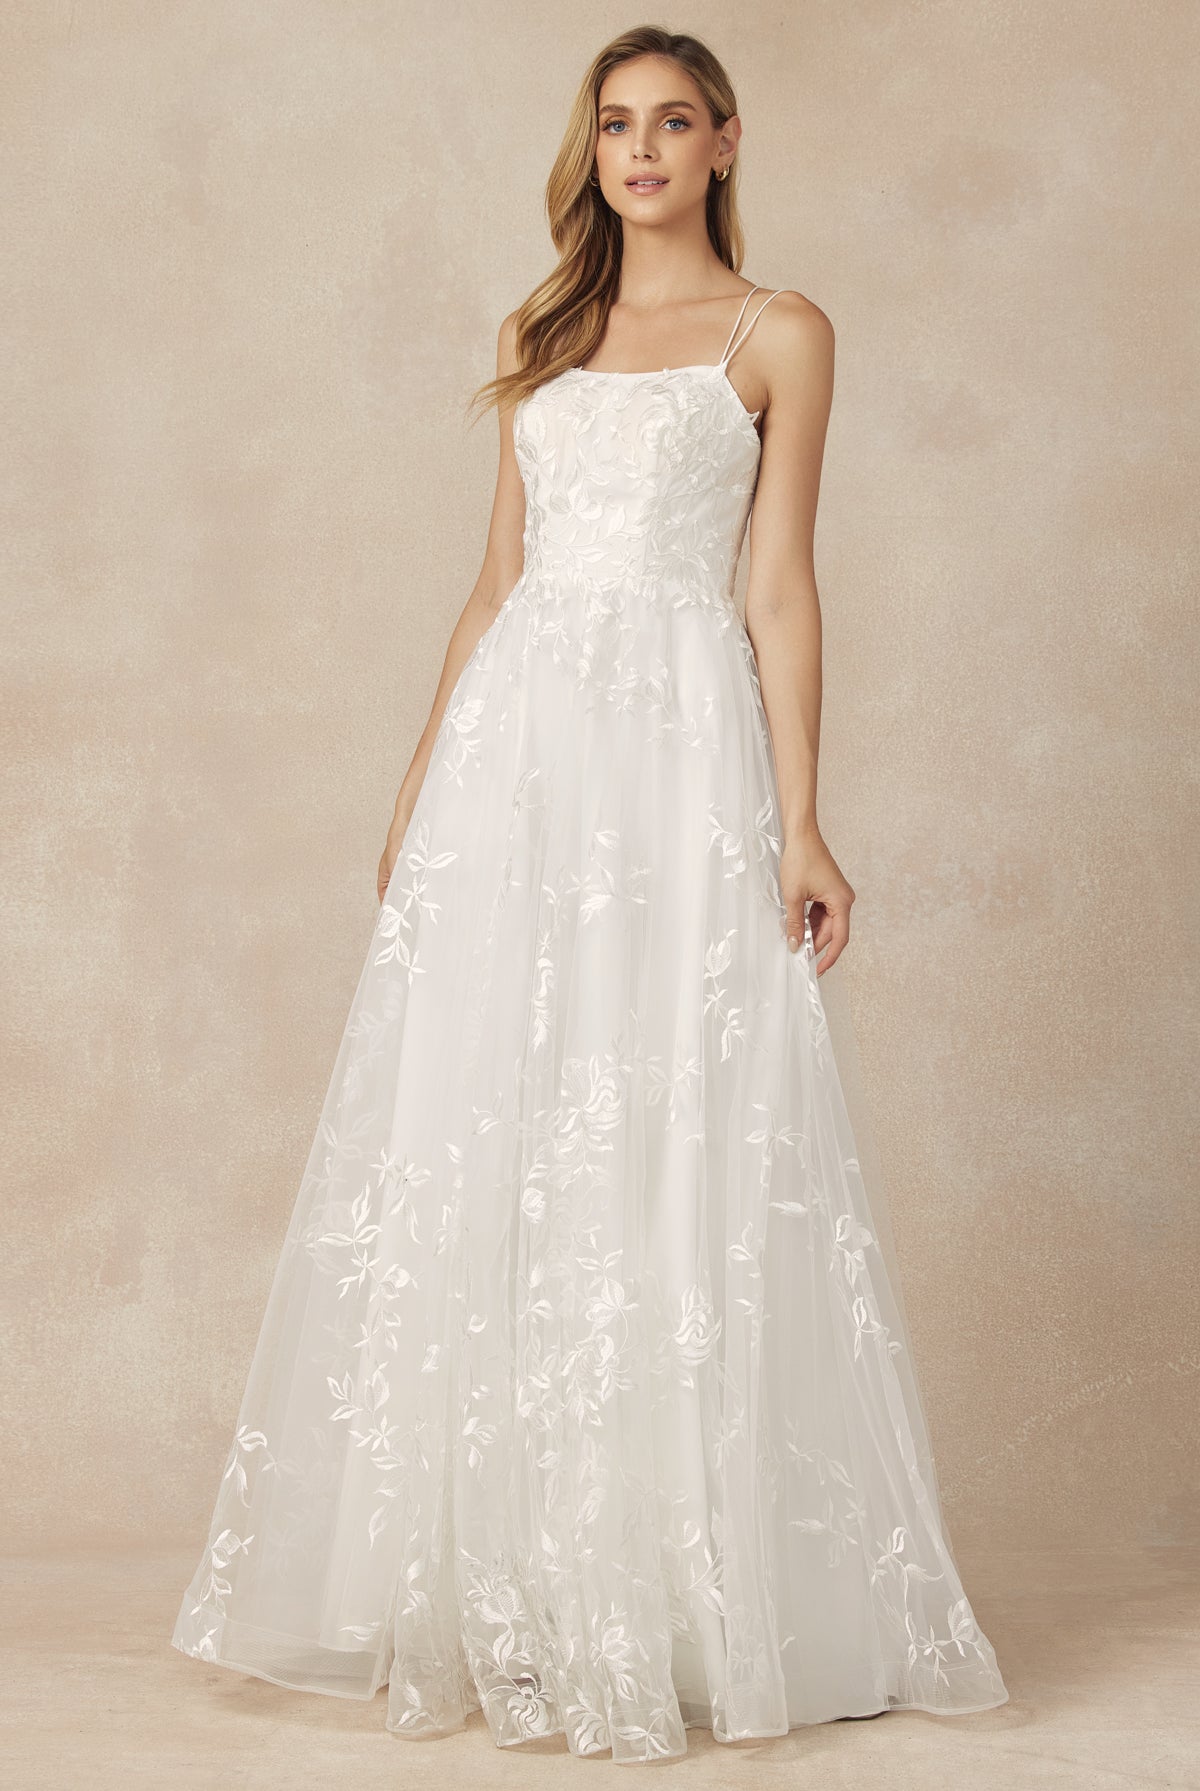 A- line wedding gown alternative